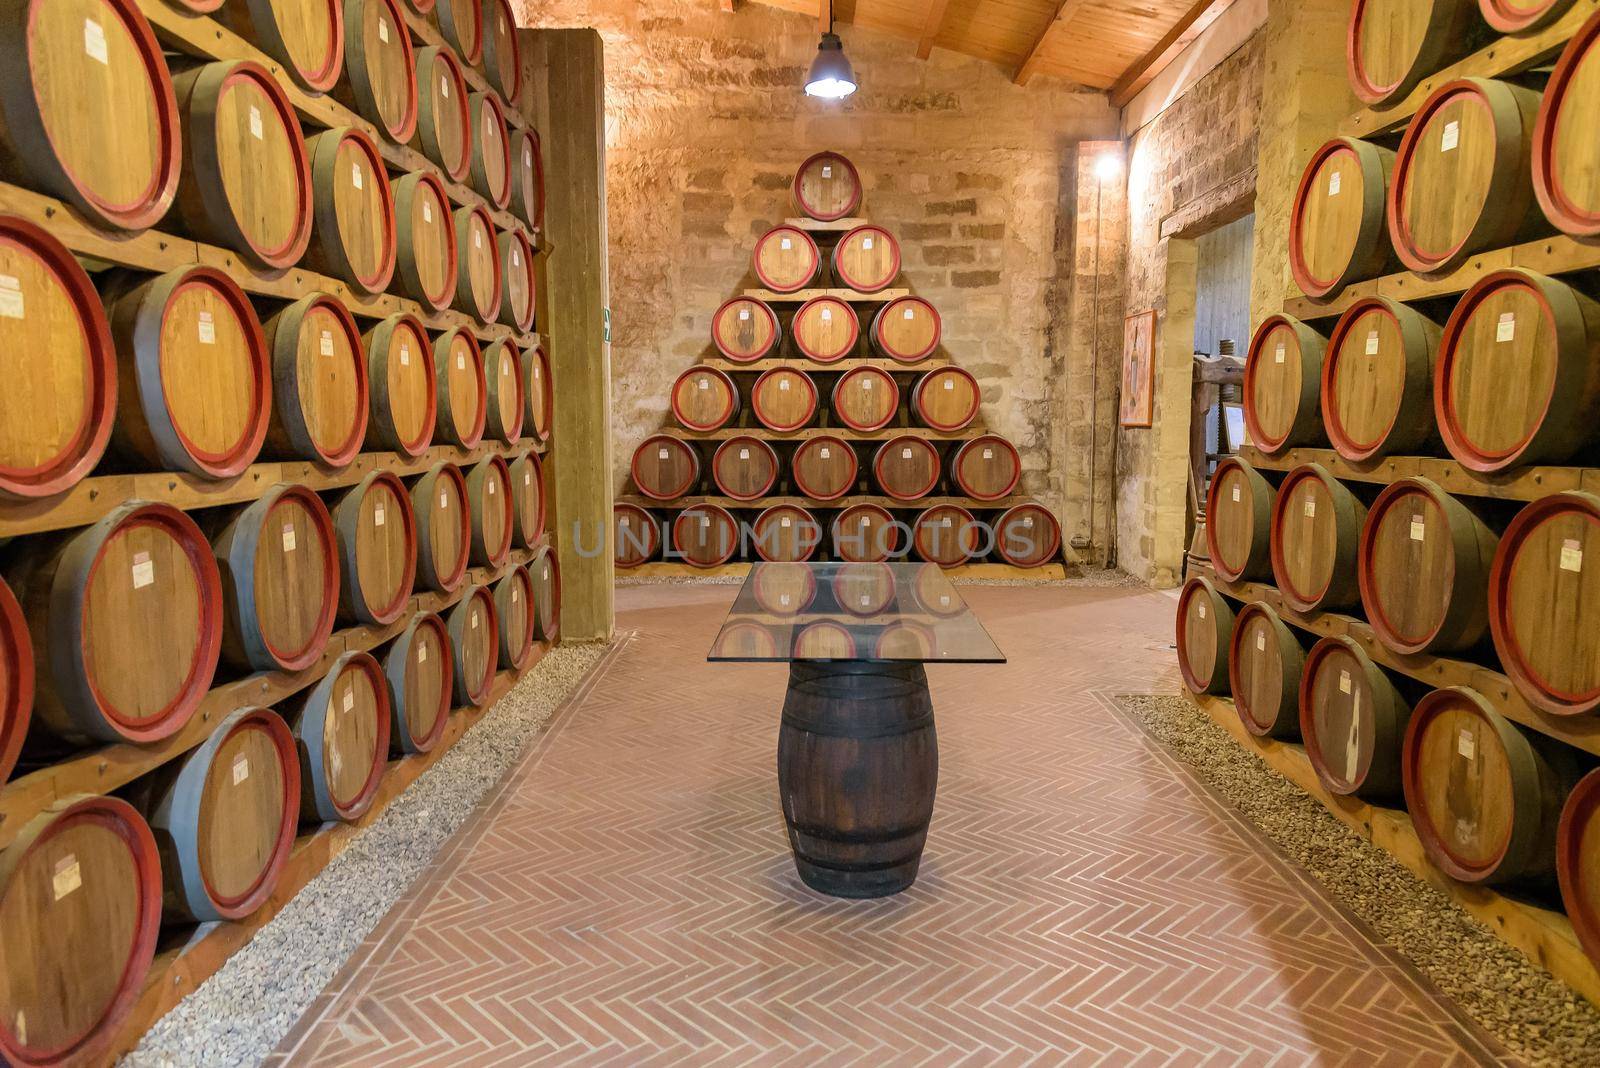 Barrels in a wine cellar by mkos83